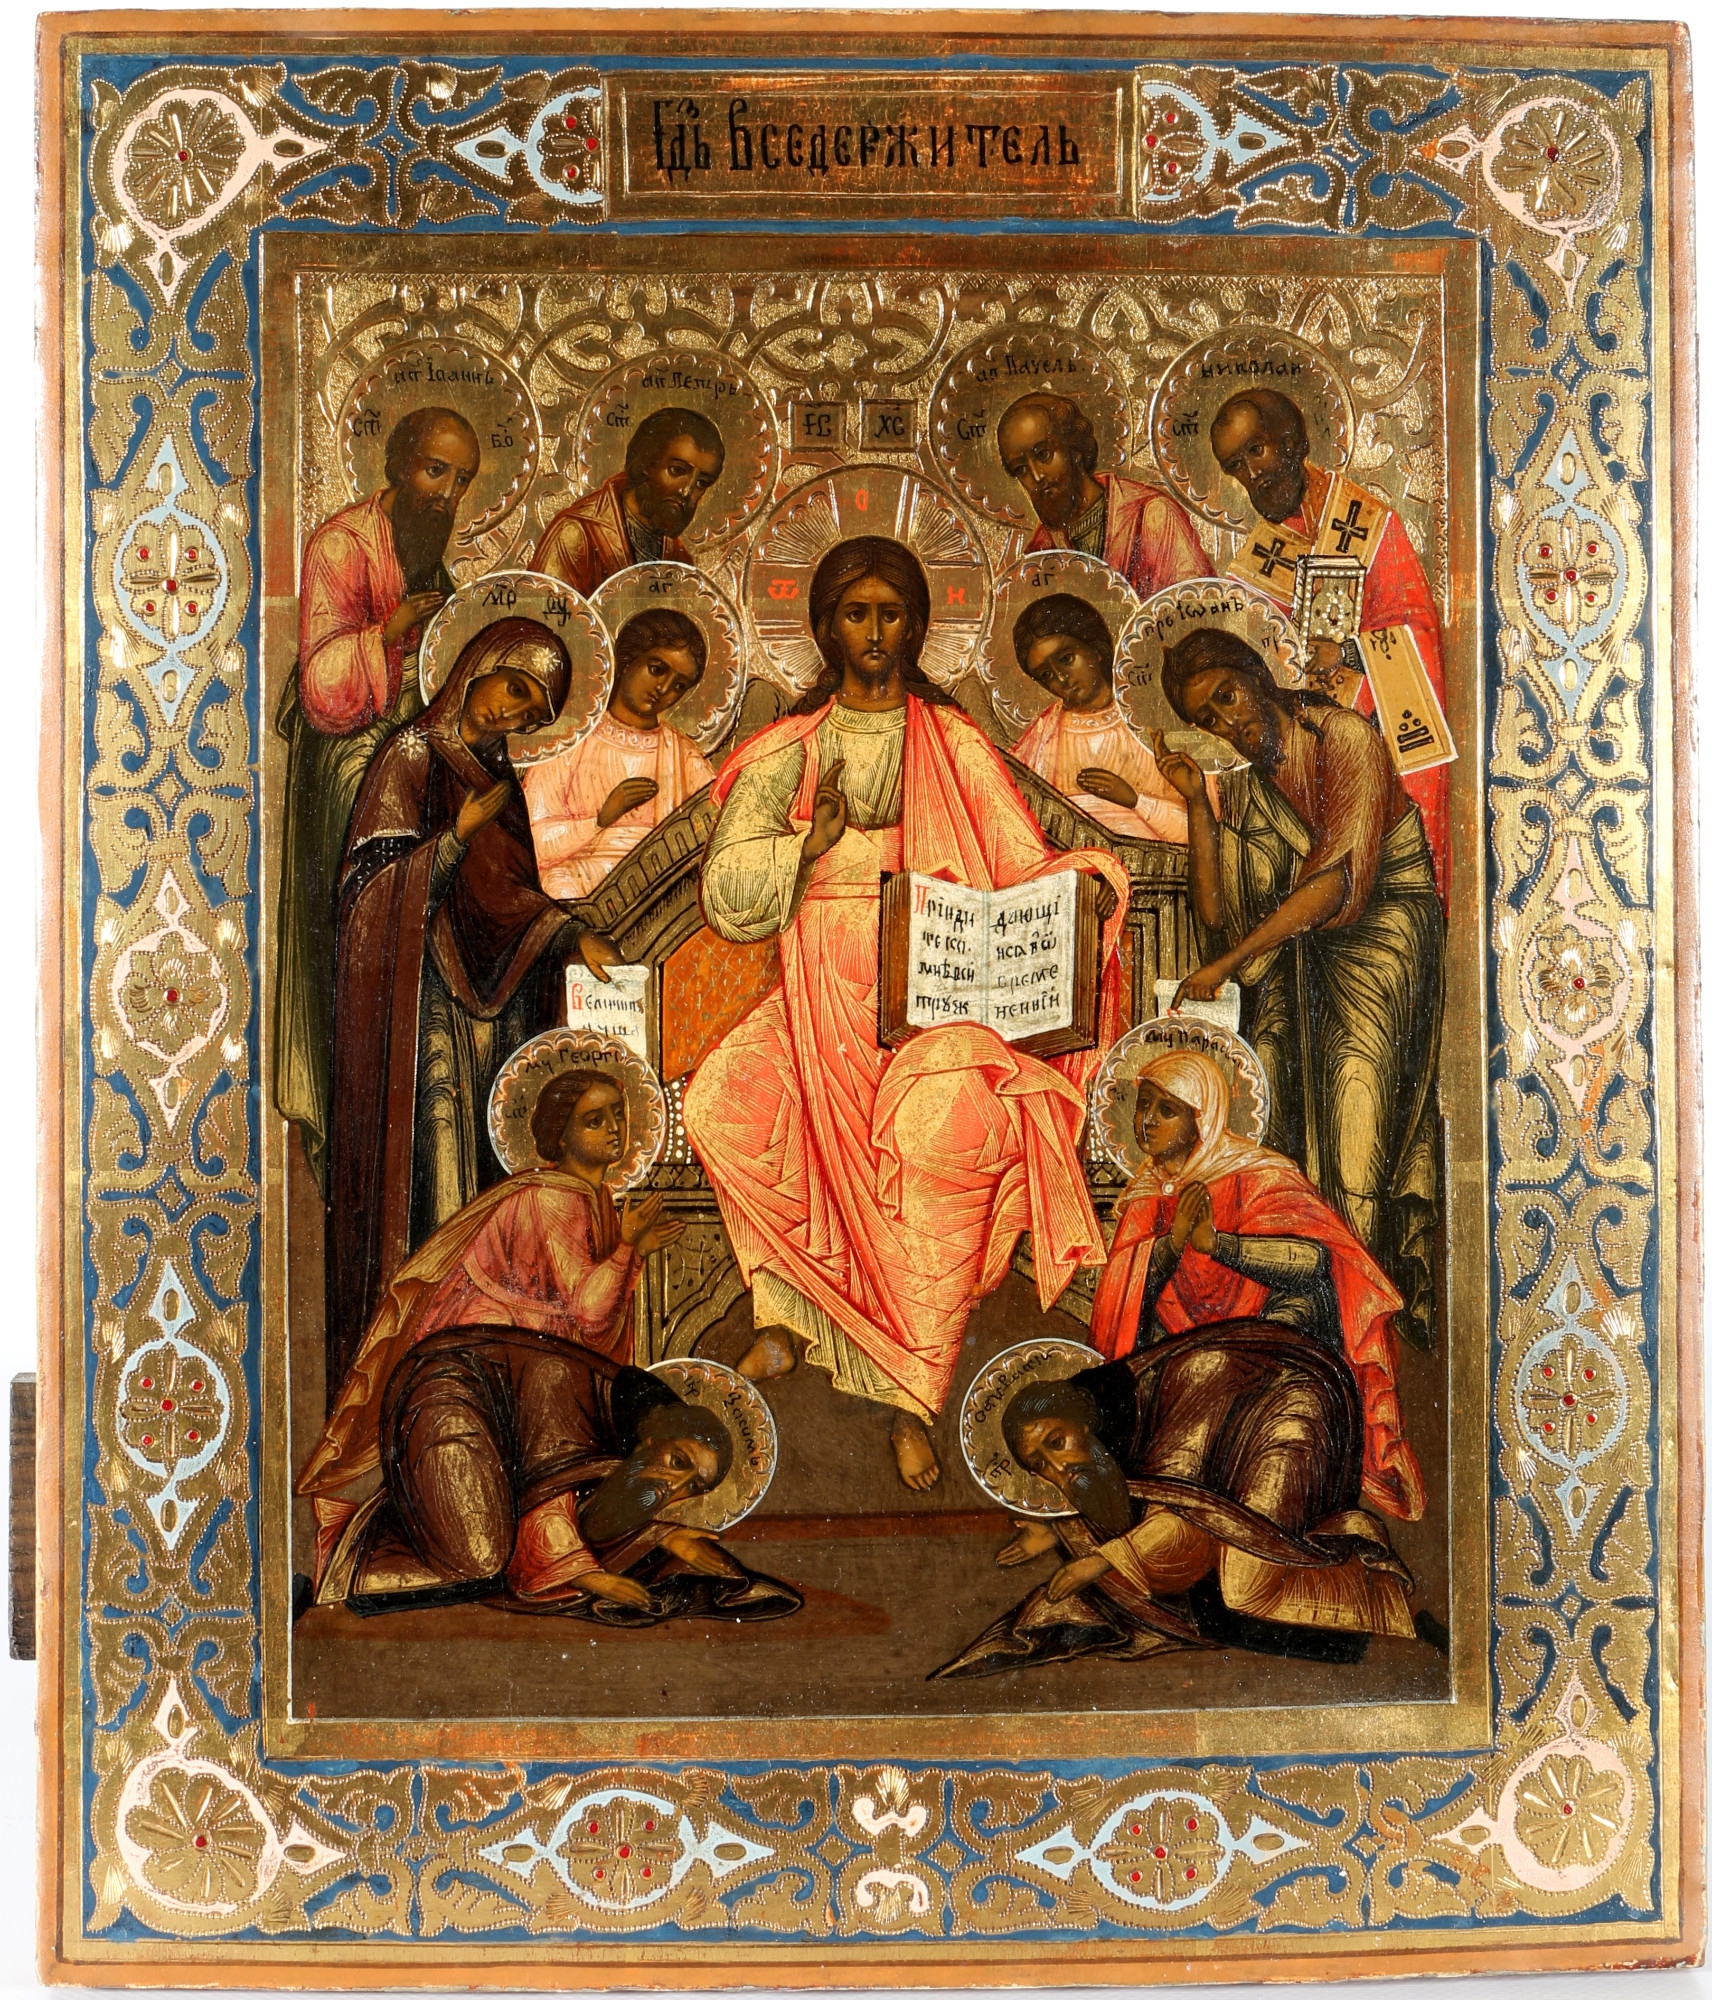 Russia icon extended Deesis - enthroned Christ, Russland Ikone erweiterte Deesis - thronender Christ